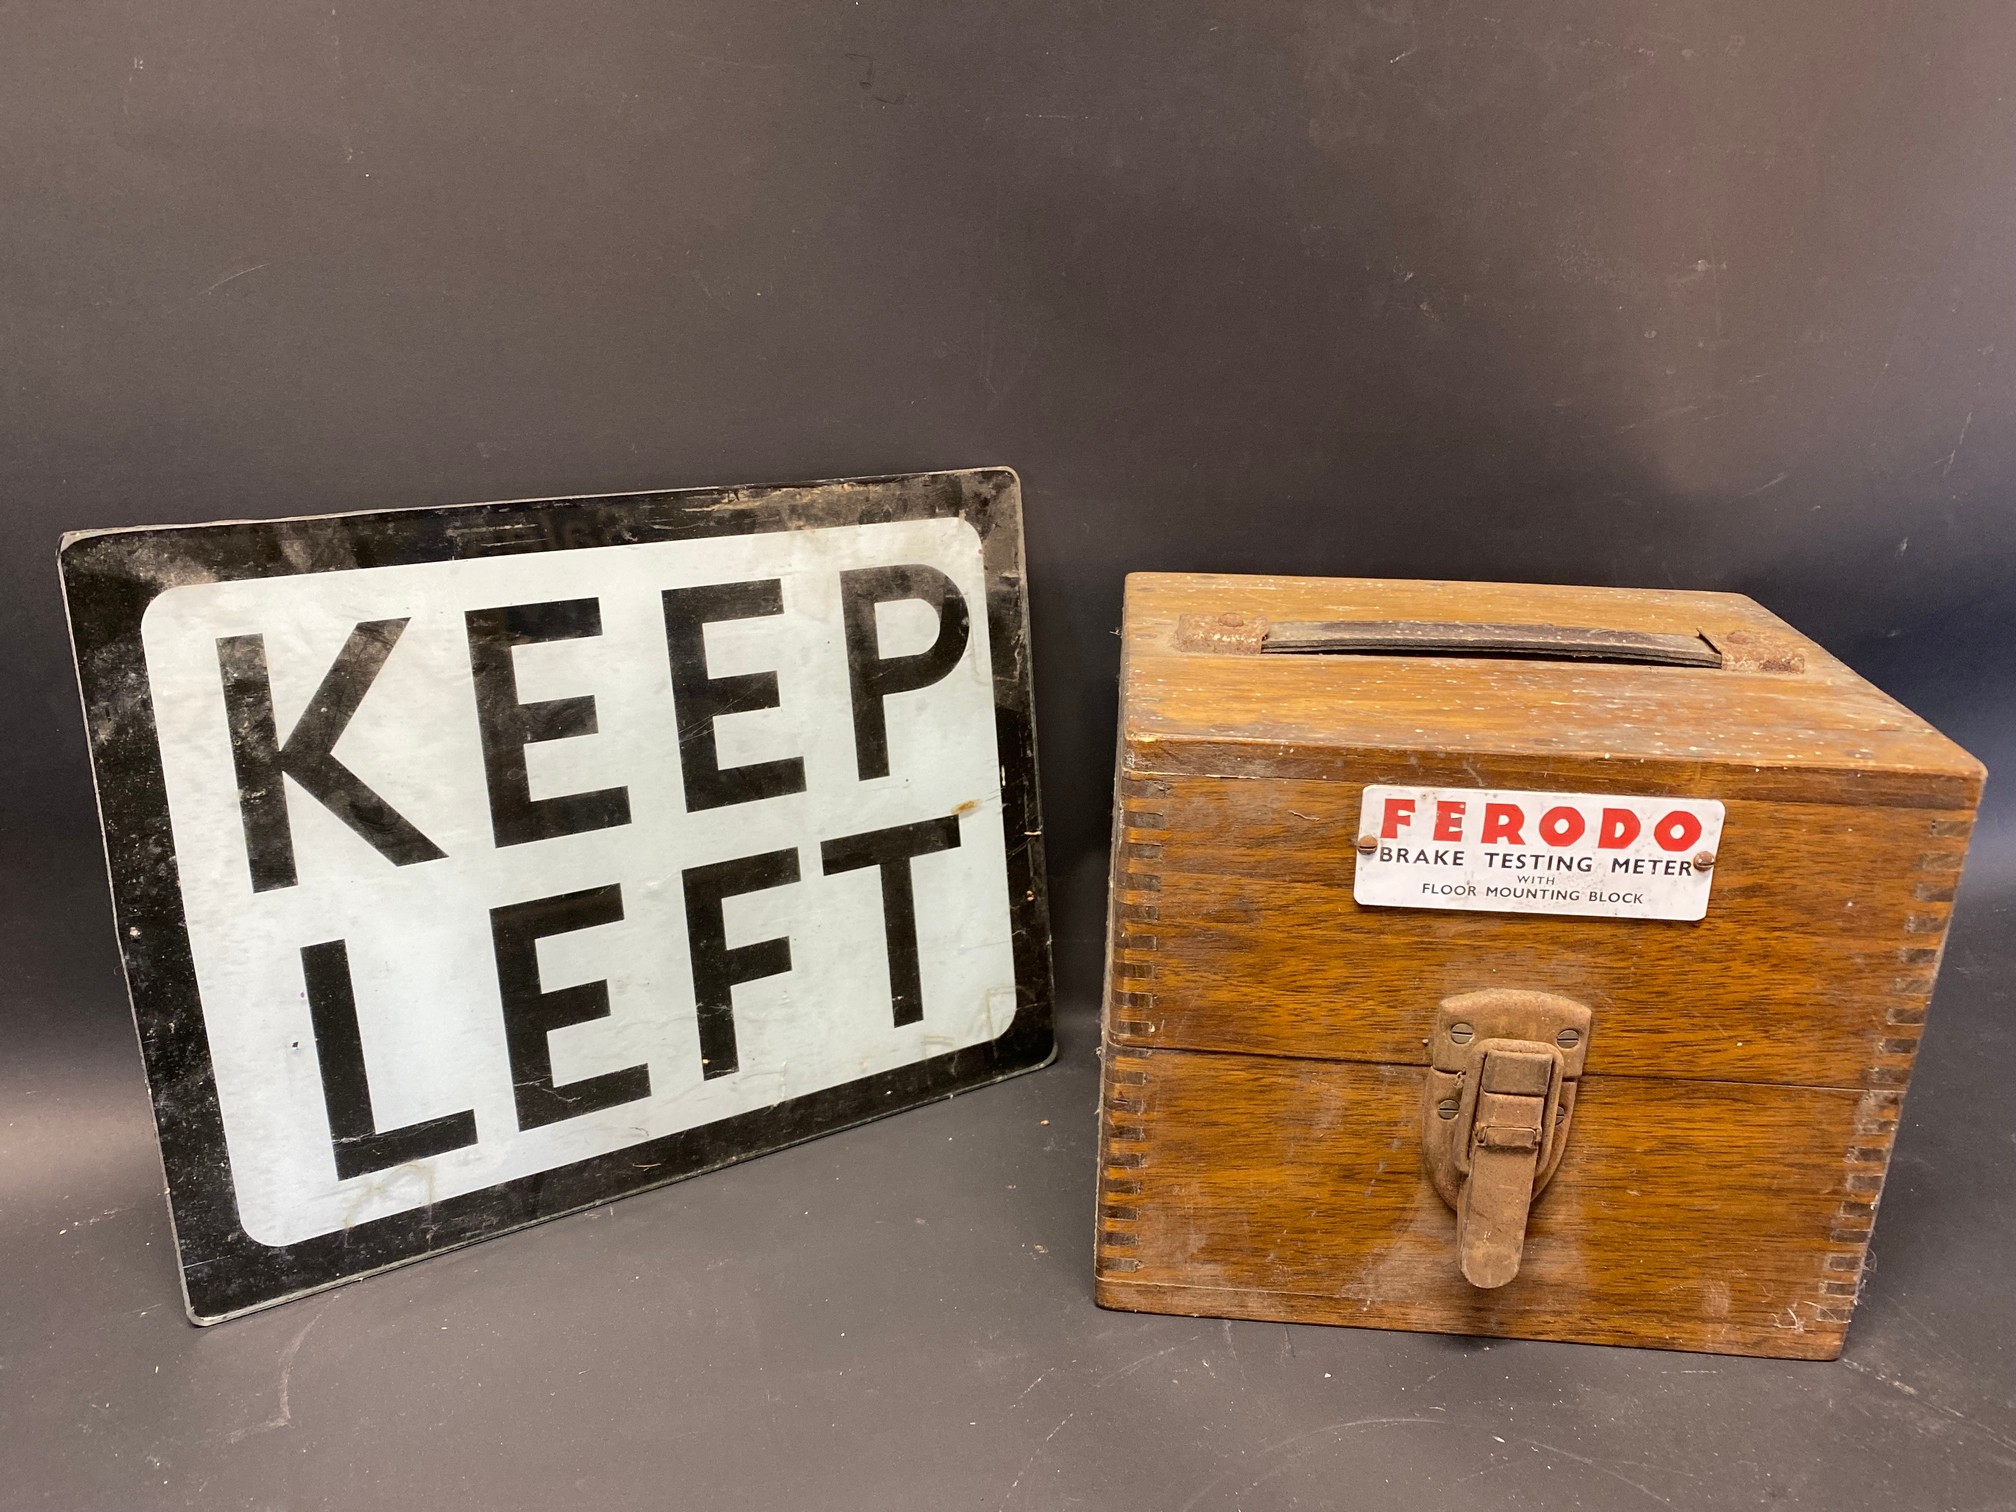 A Ferodo Brake Testing Meter empty box and a glass Keep Left illuminated bollard insert.